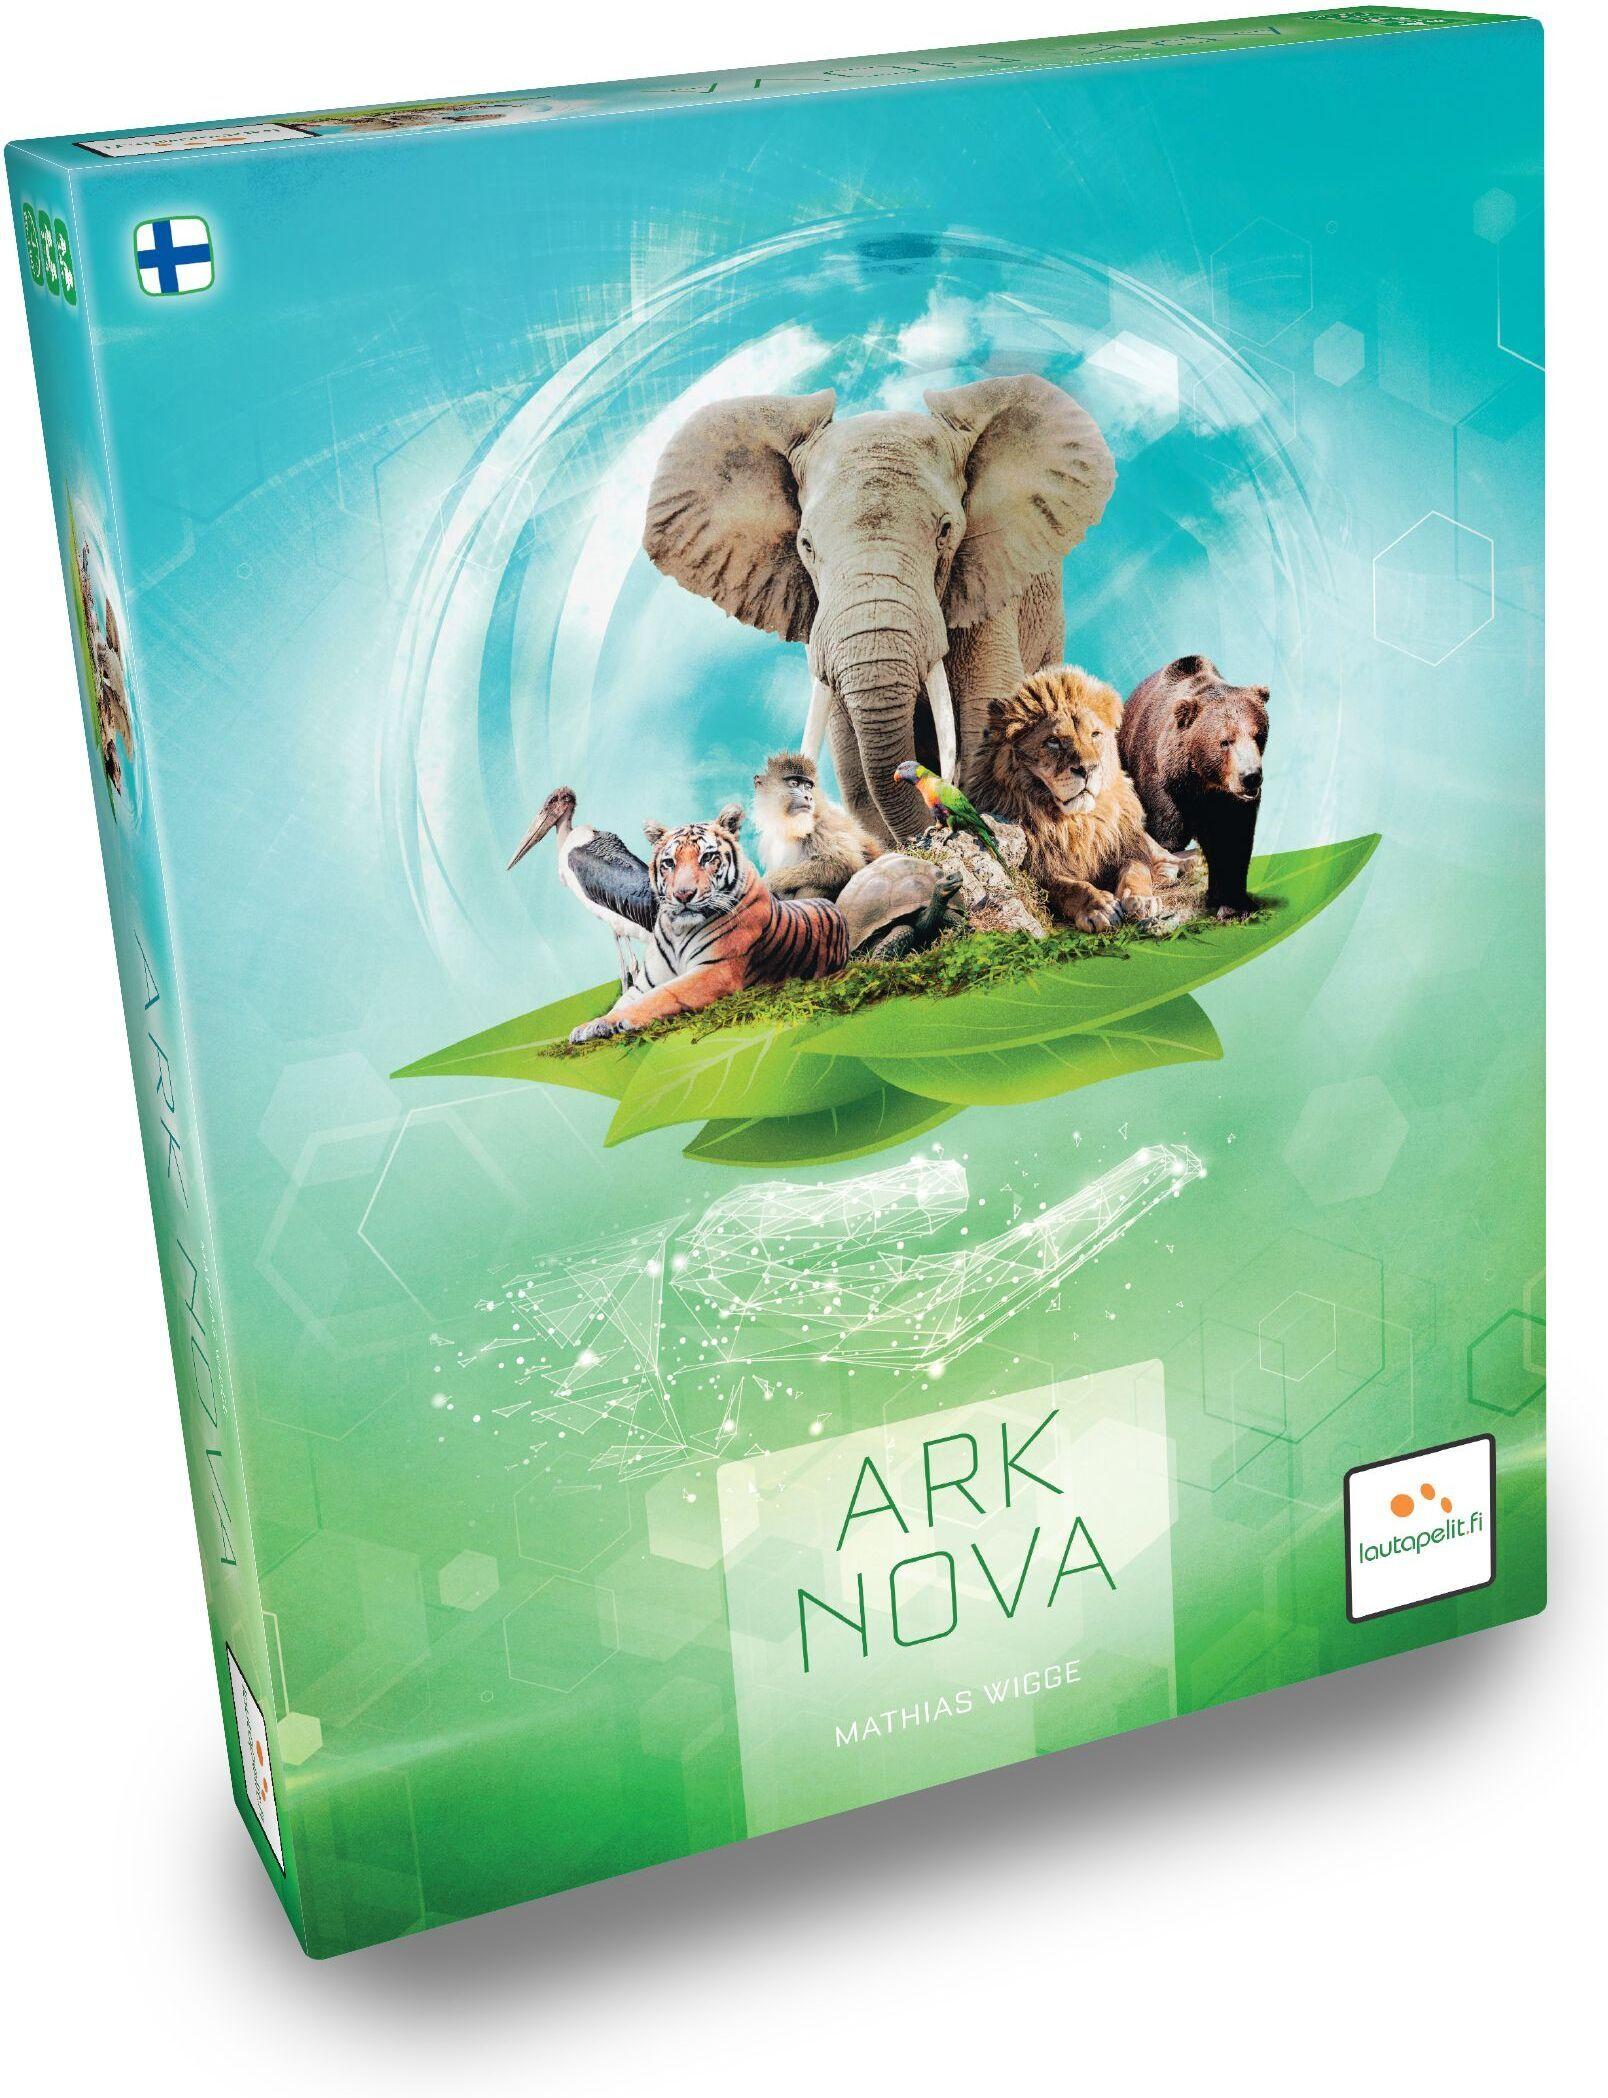 Ark Nova review